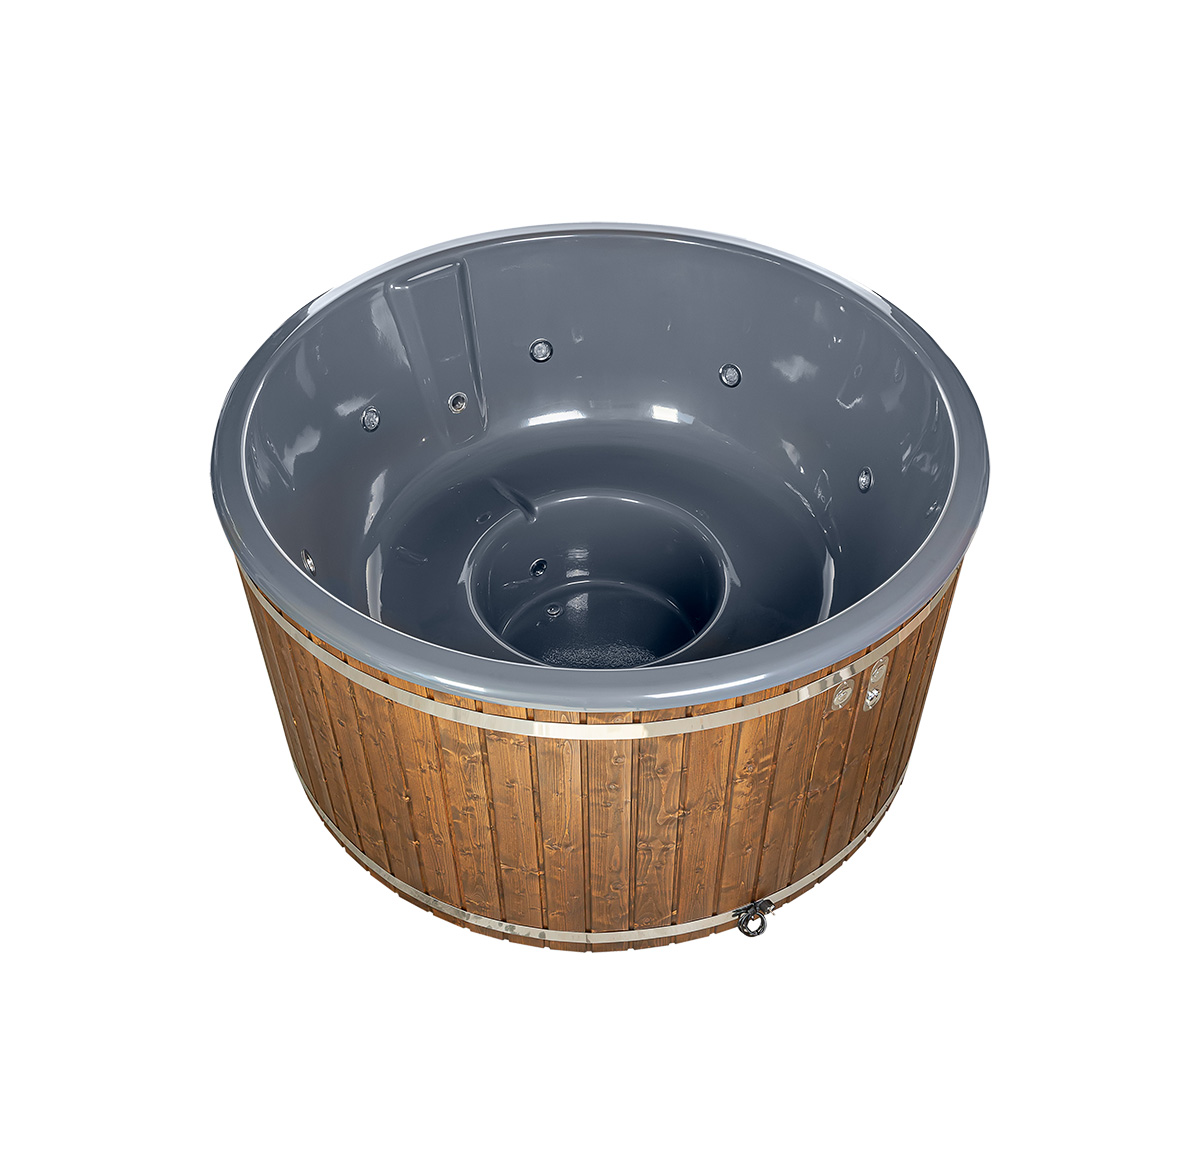 1. Woodpecker hot tub, prime hot tub hot tub with external heate12 copy